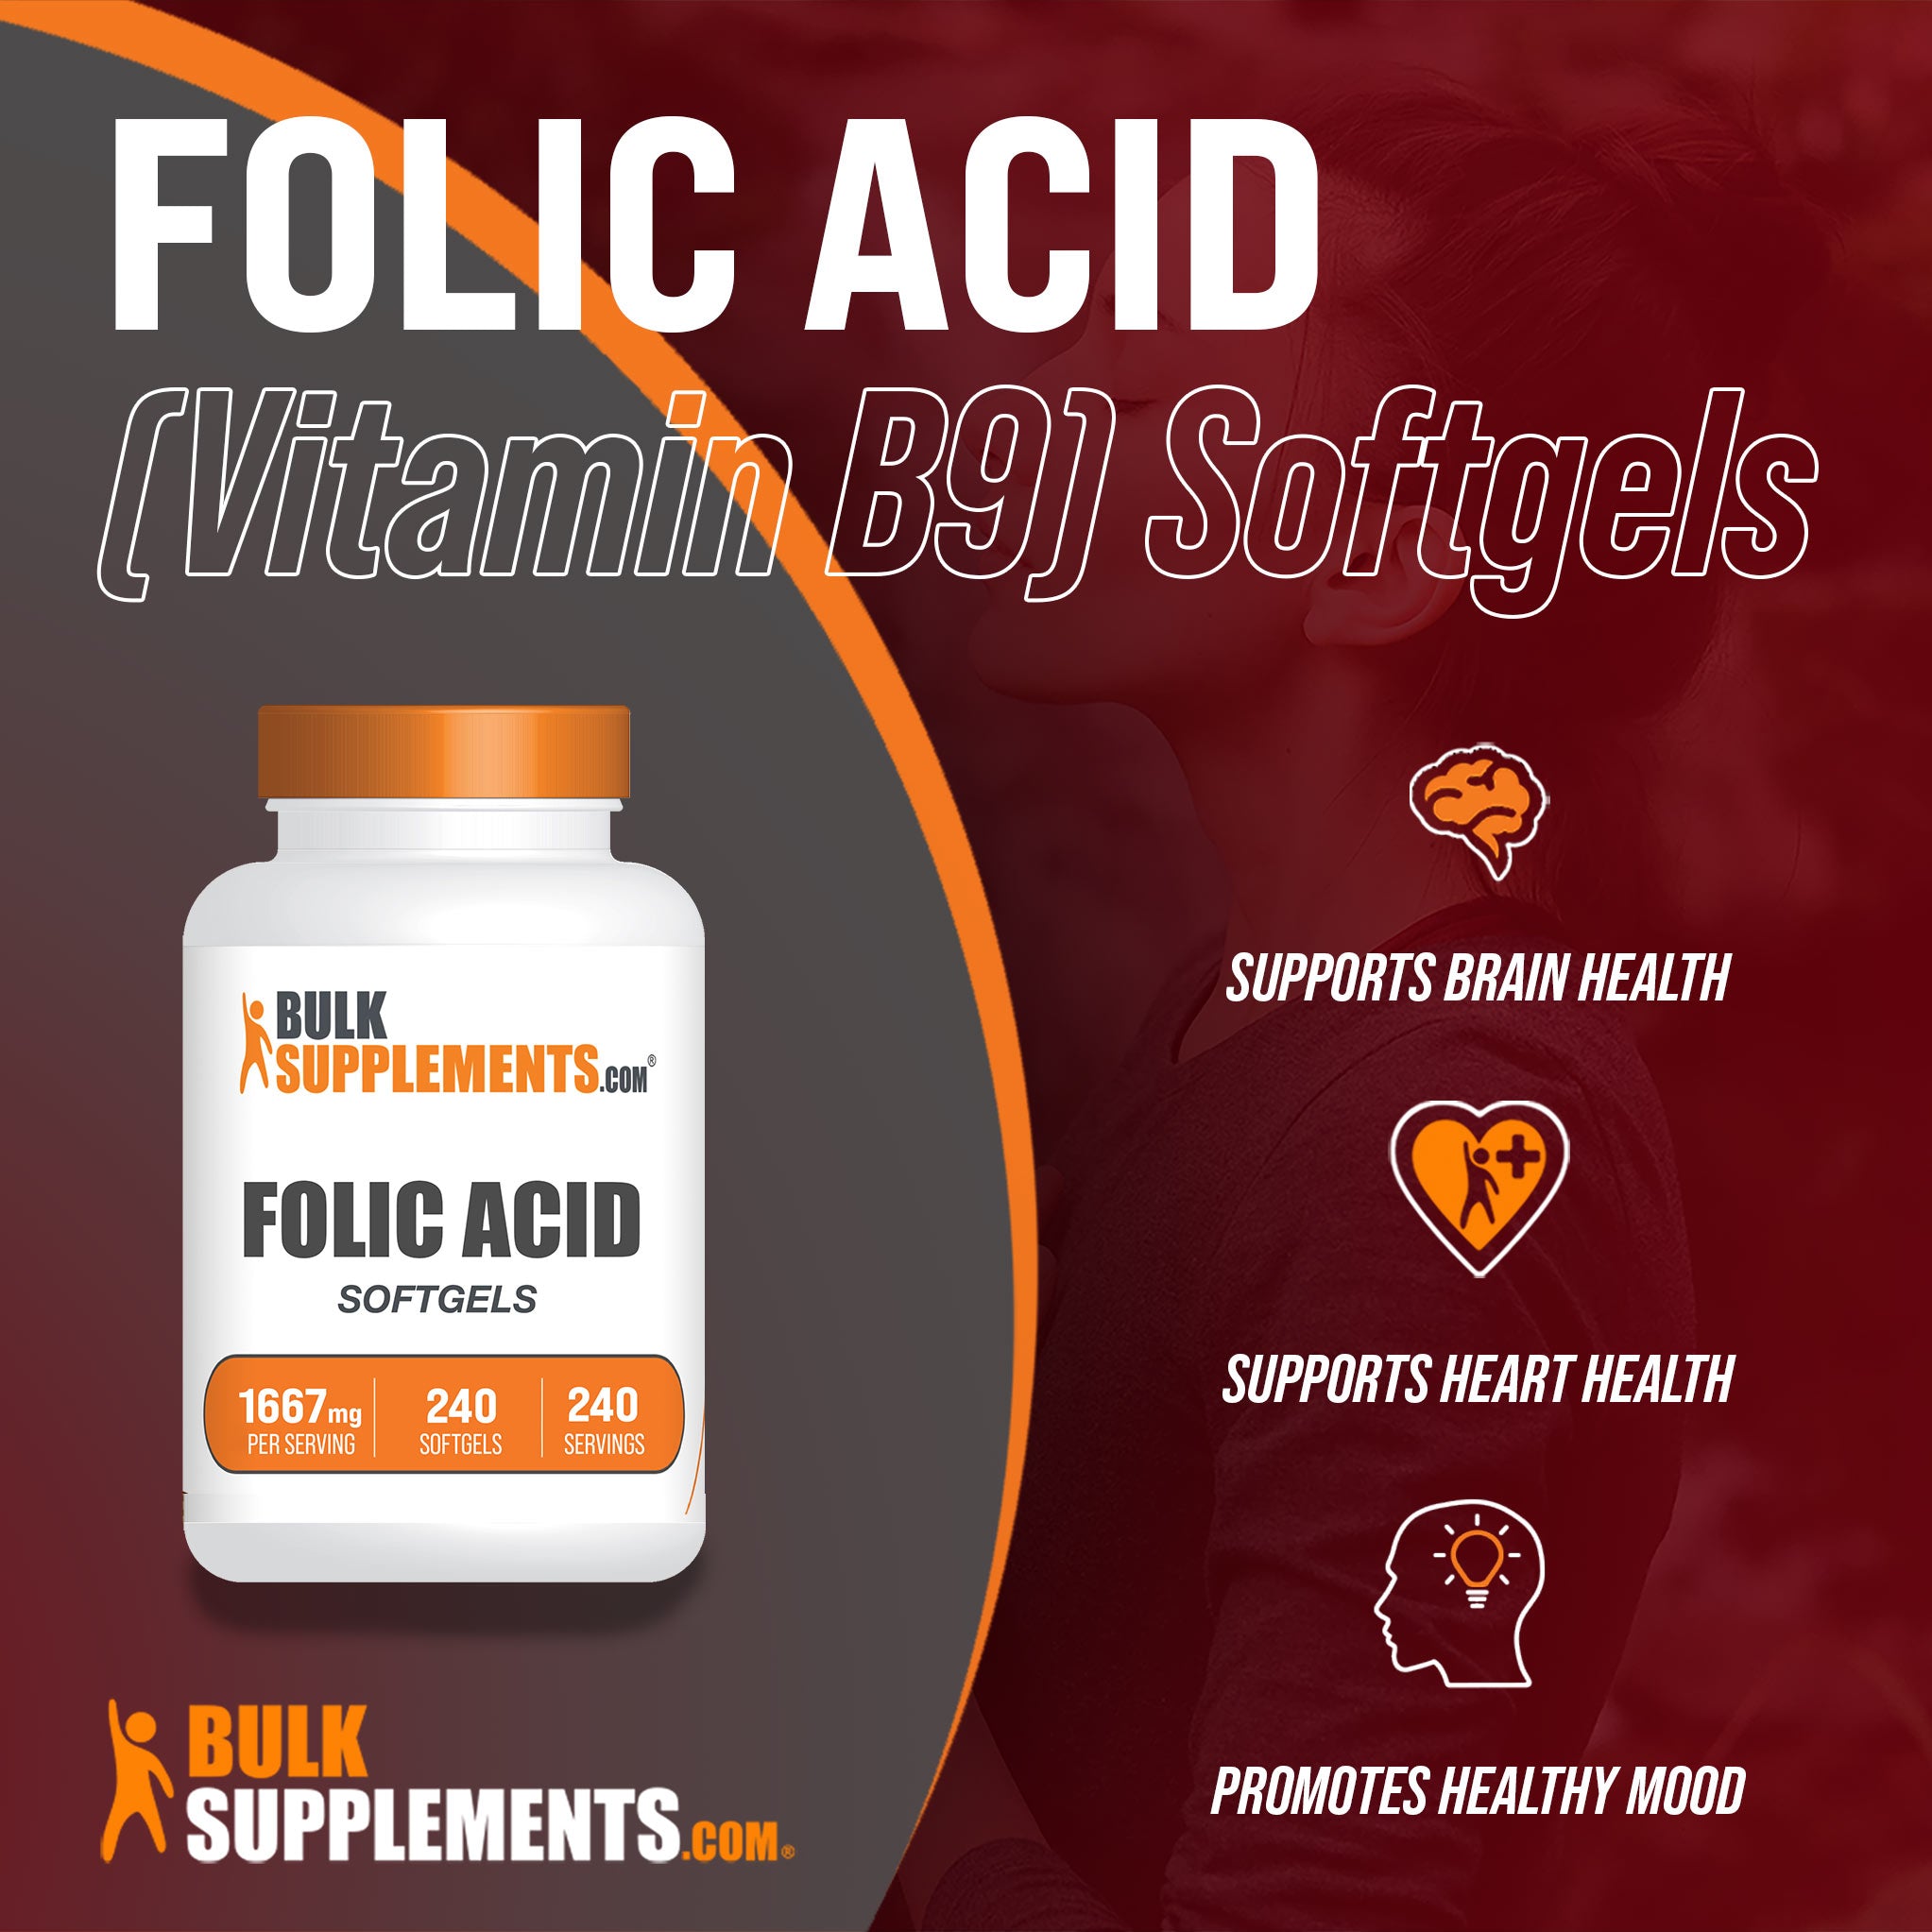 Benefits of Folic Acid Vitamin B9 Softgels; Supports brain health, supports heart health, promotes healthy mood